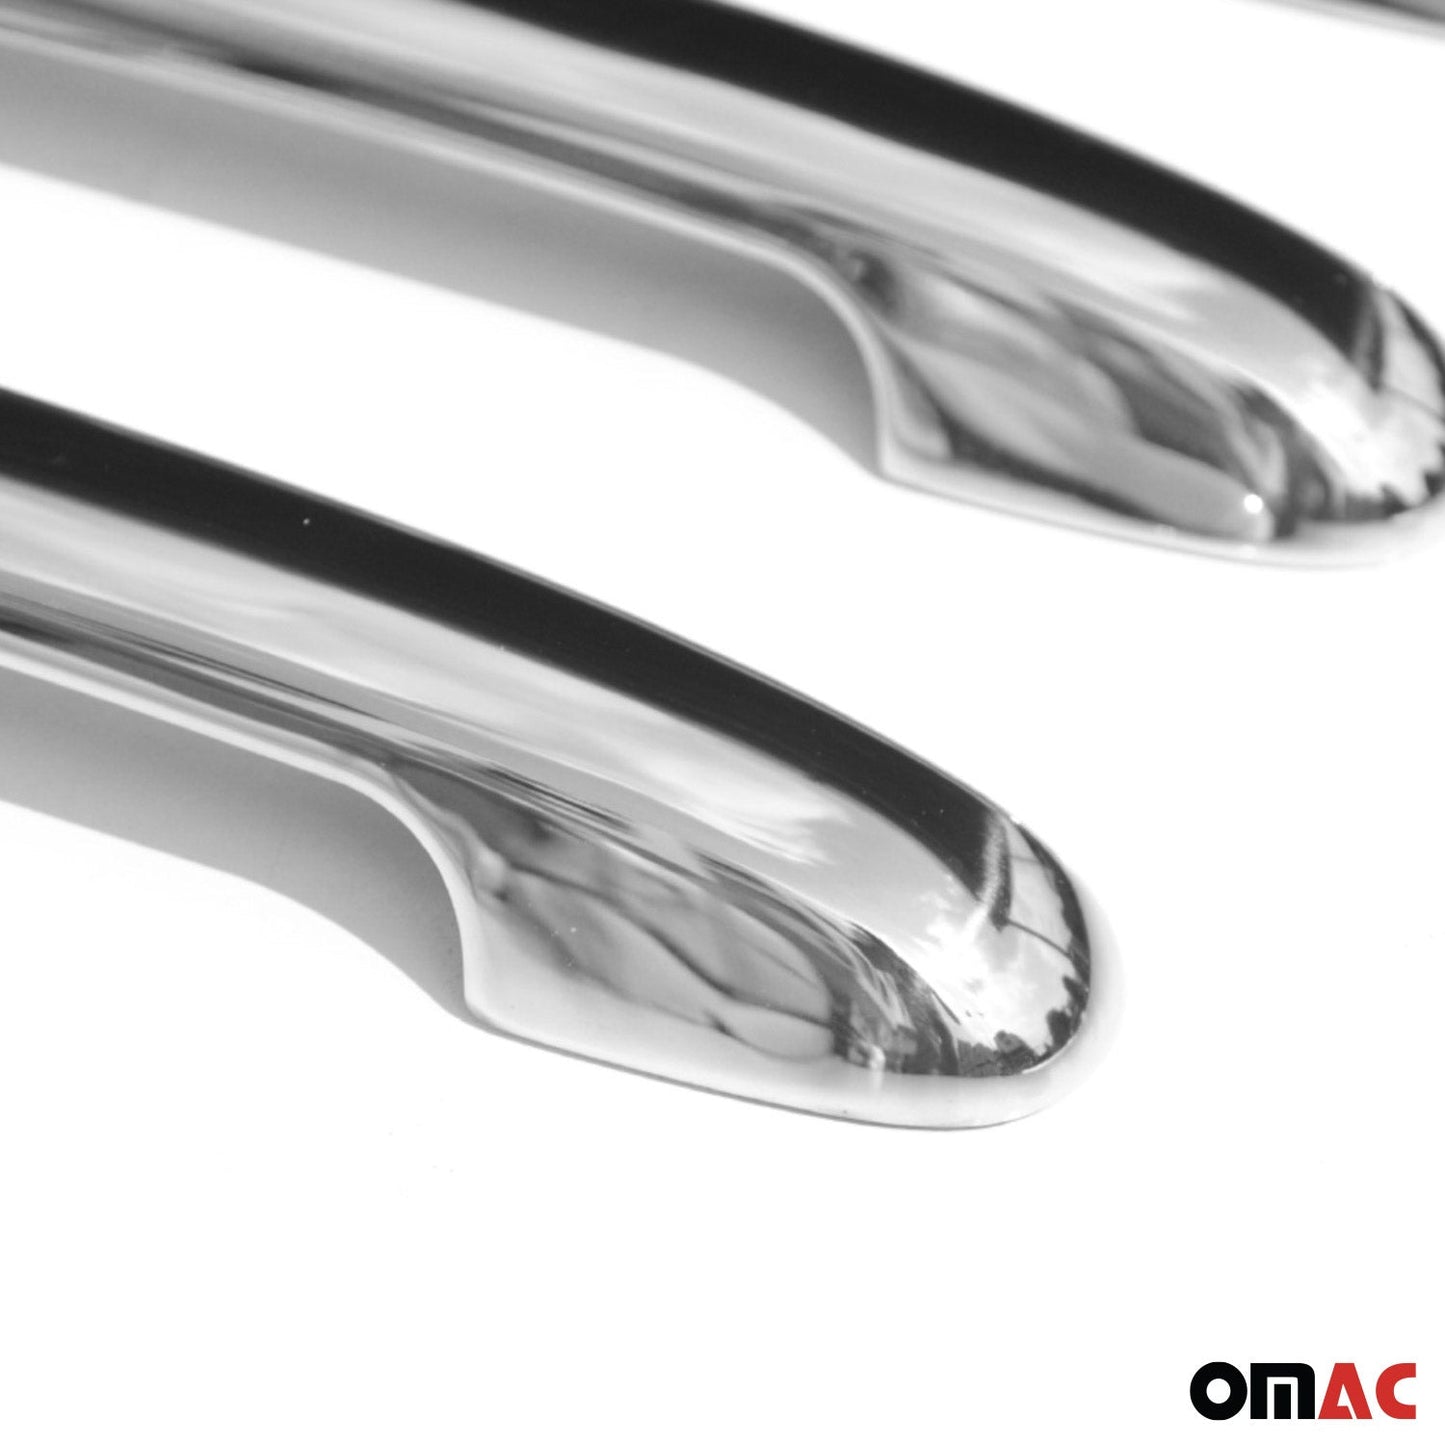 OMAC Car Door Handle Cover Protector for Hyundai Elantra 2007-2010 Silver 8Pcs Steel '3209041